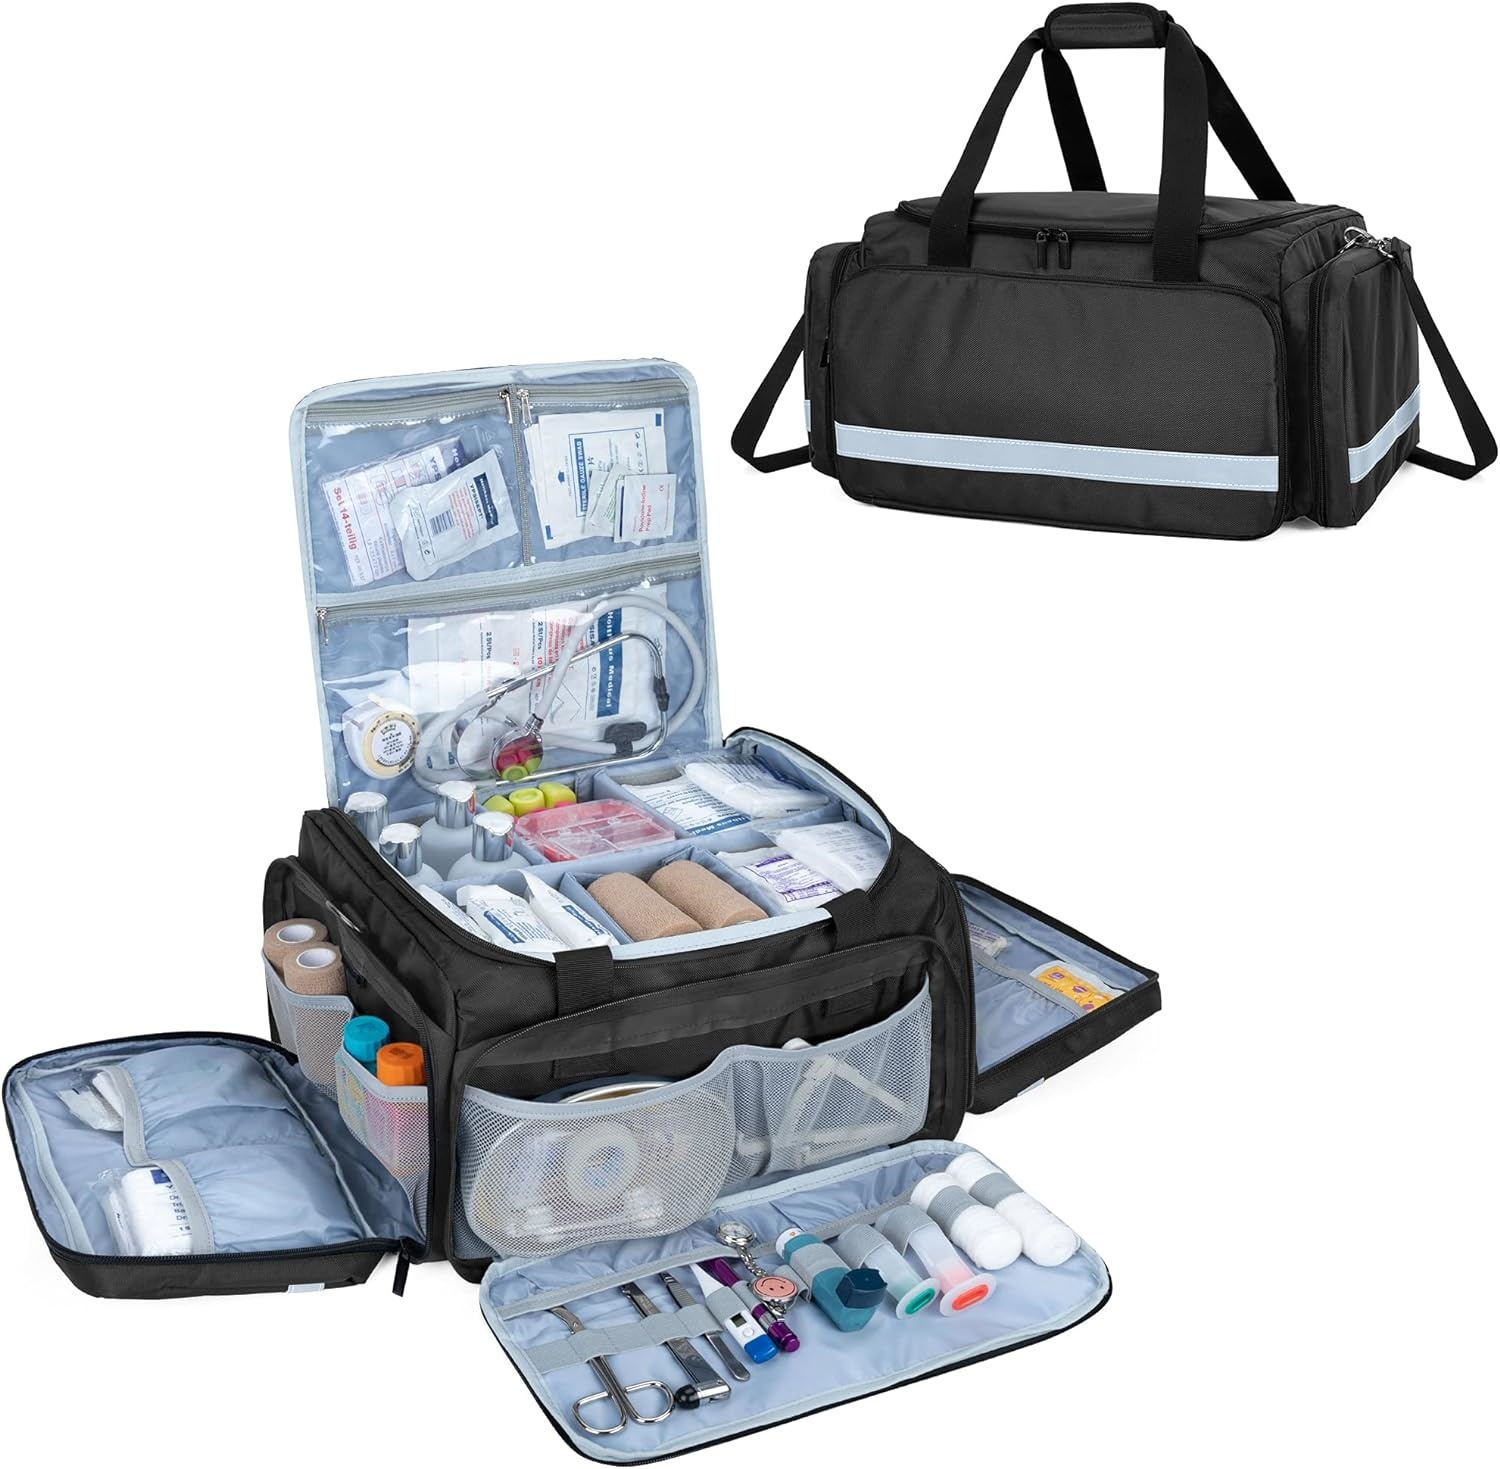 First Responder Bag , Pro Medical Carrier Bag, First Aid Kits Bag with Inner Dividers for Community Care, Home Health Nurse,Bag Only, EMT, EMS, Black – Patented Design